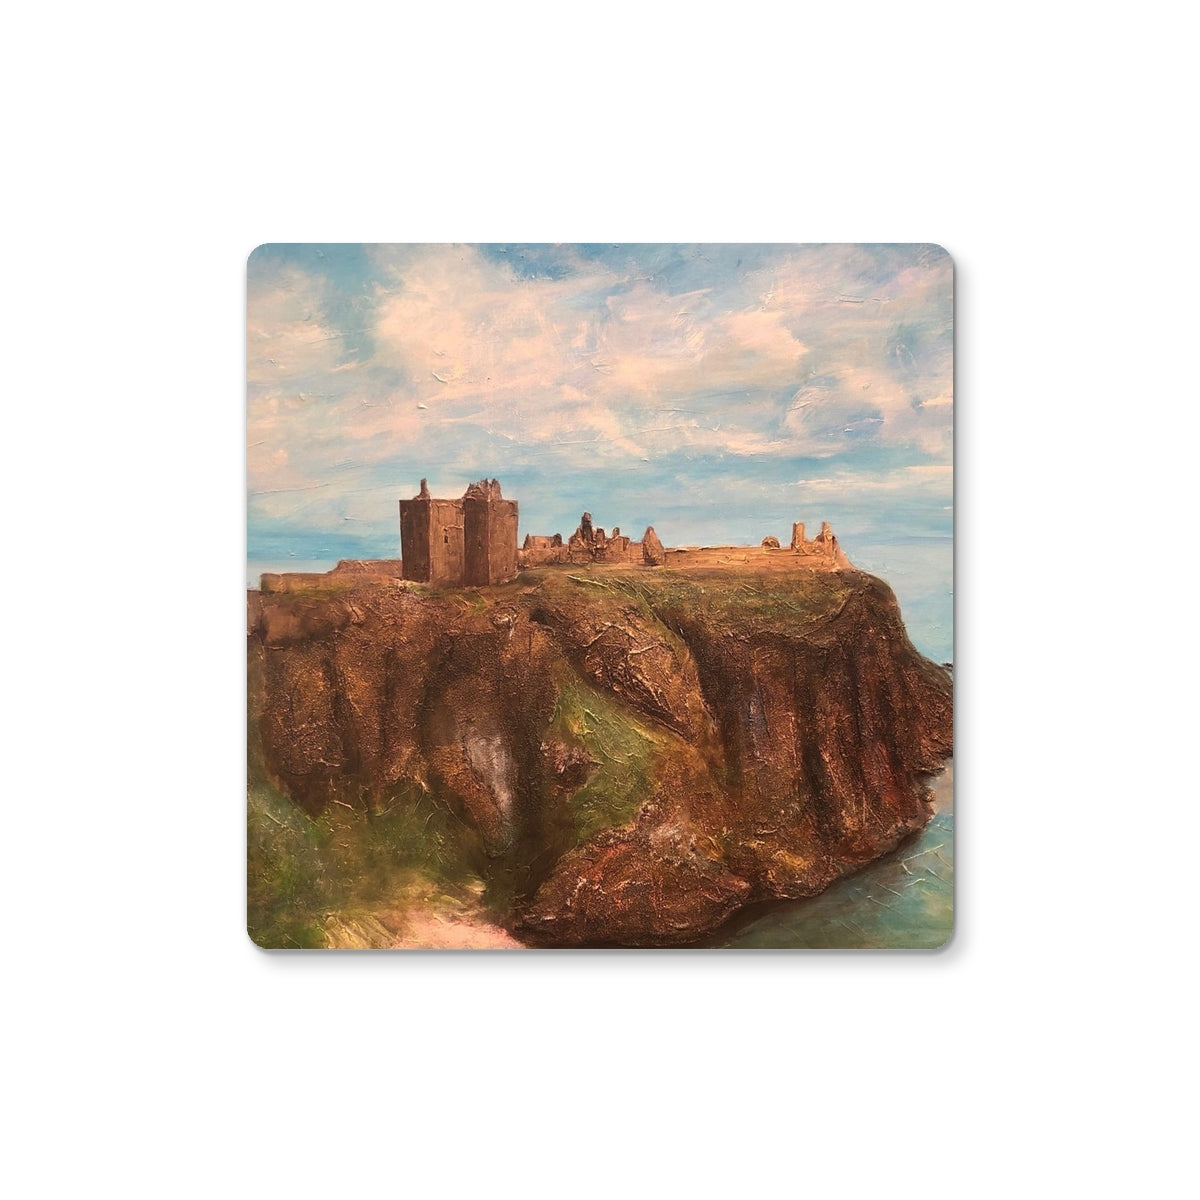 Dunnottar Castle Art Gifts Coaster-Homeware-Prodigi-Single Coaster-Paintings, Prints, Homeware, Art Gifts From Scotland By Scottish Artist Kevin Hunter